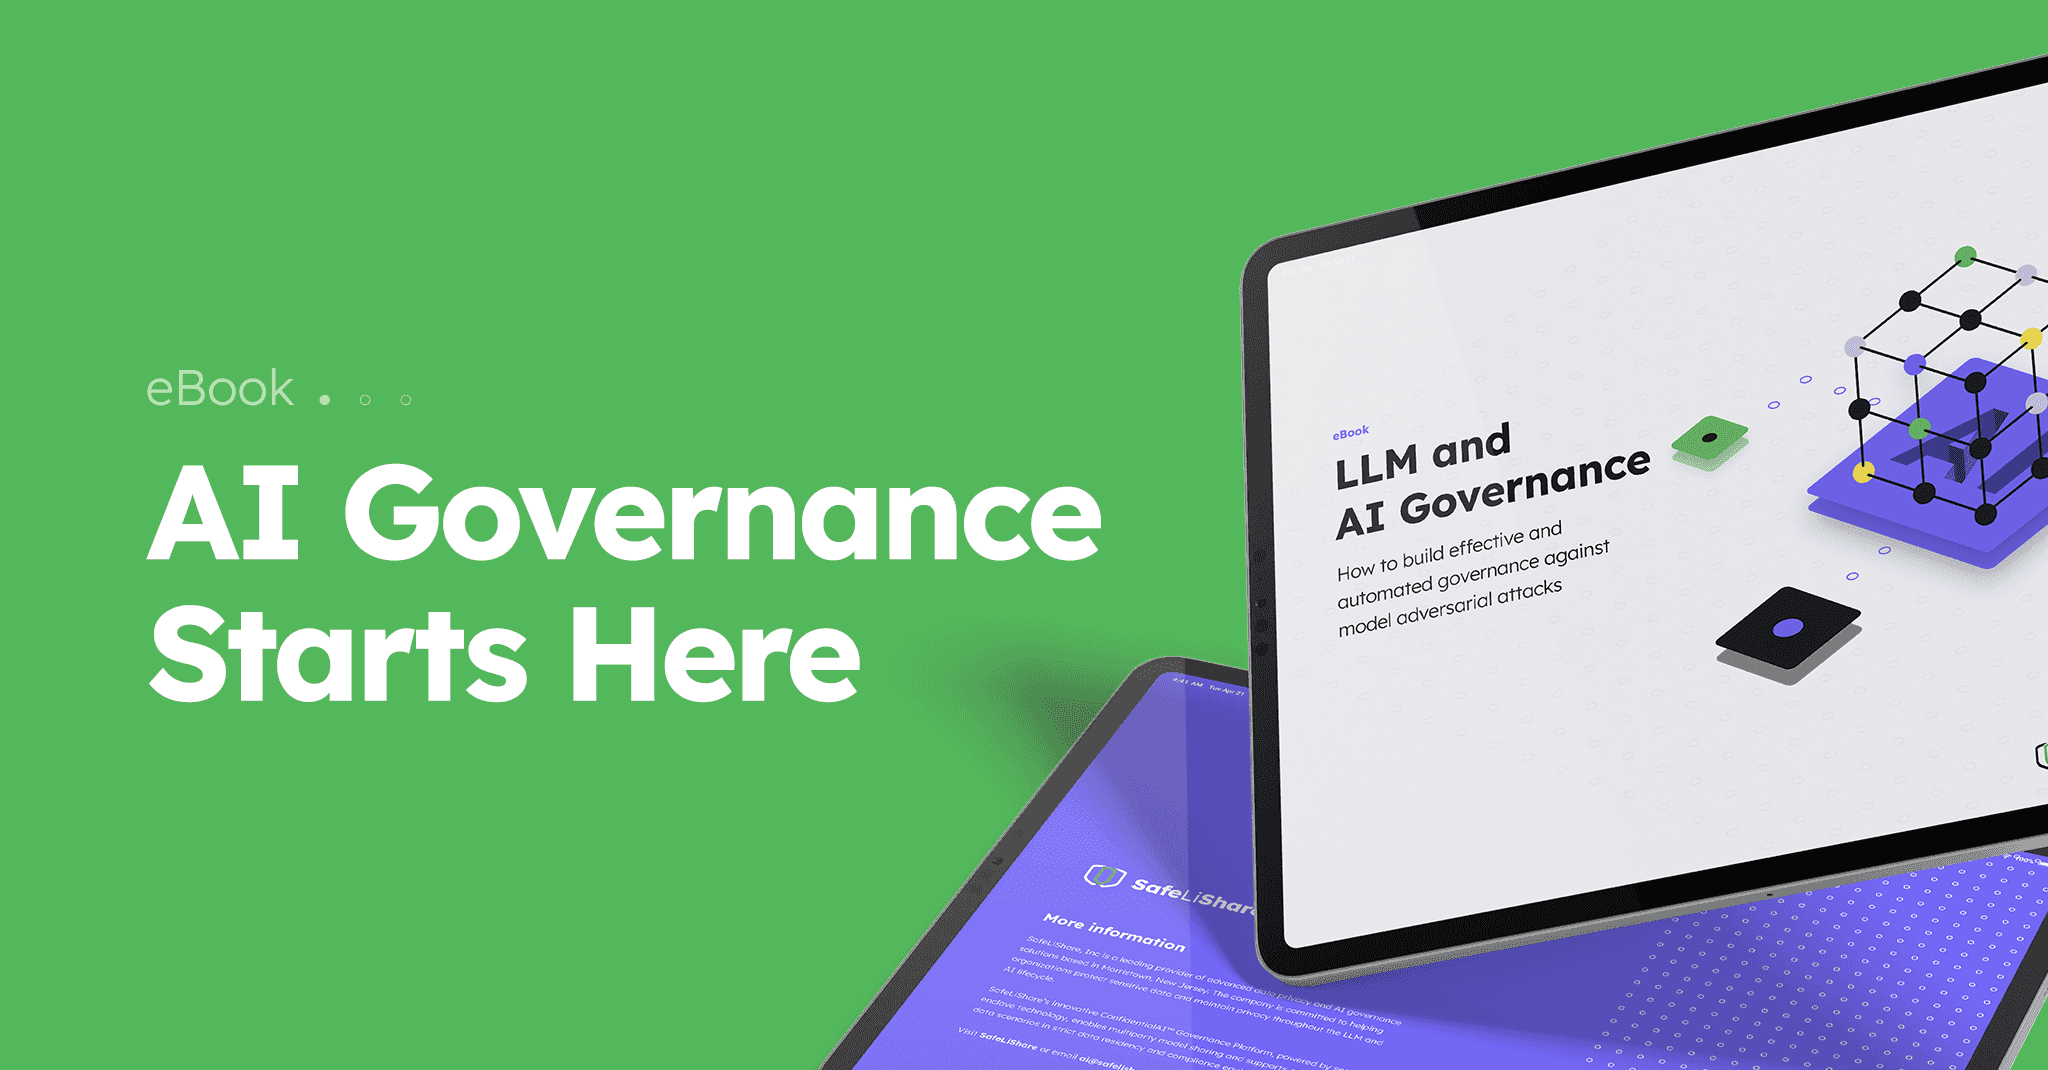 Ebook: LLM and AI Governance